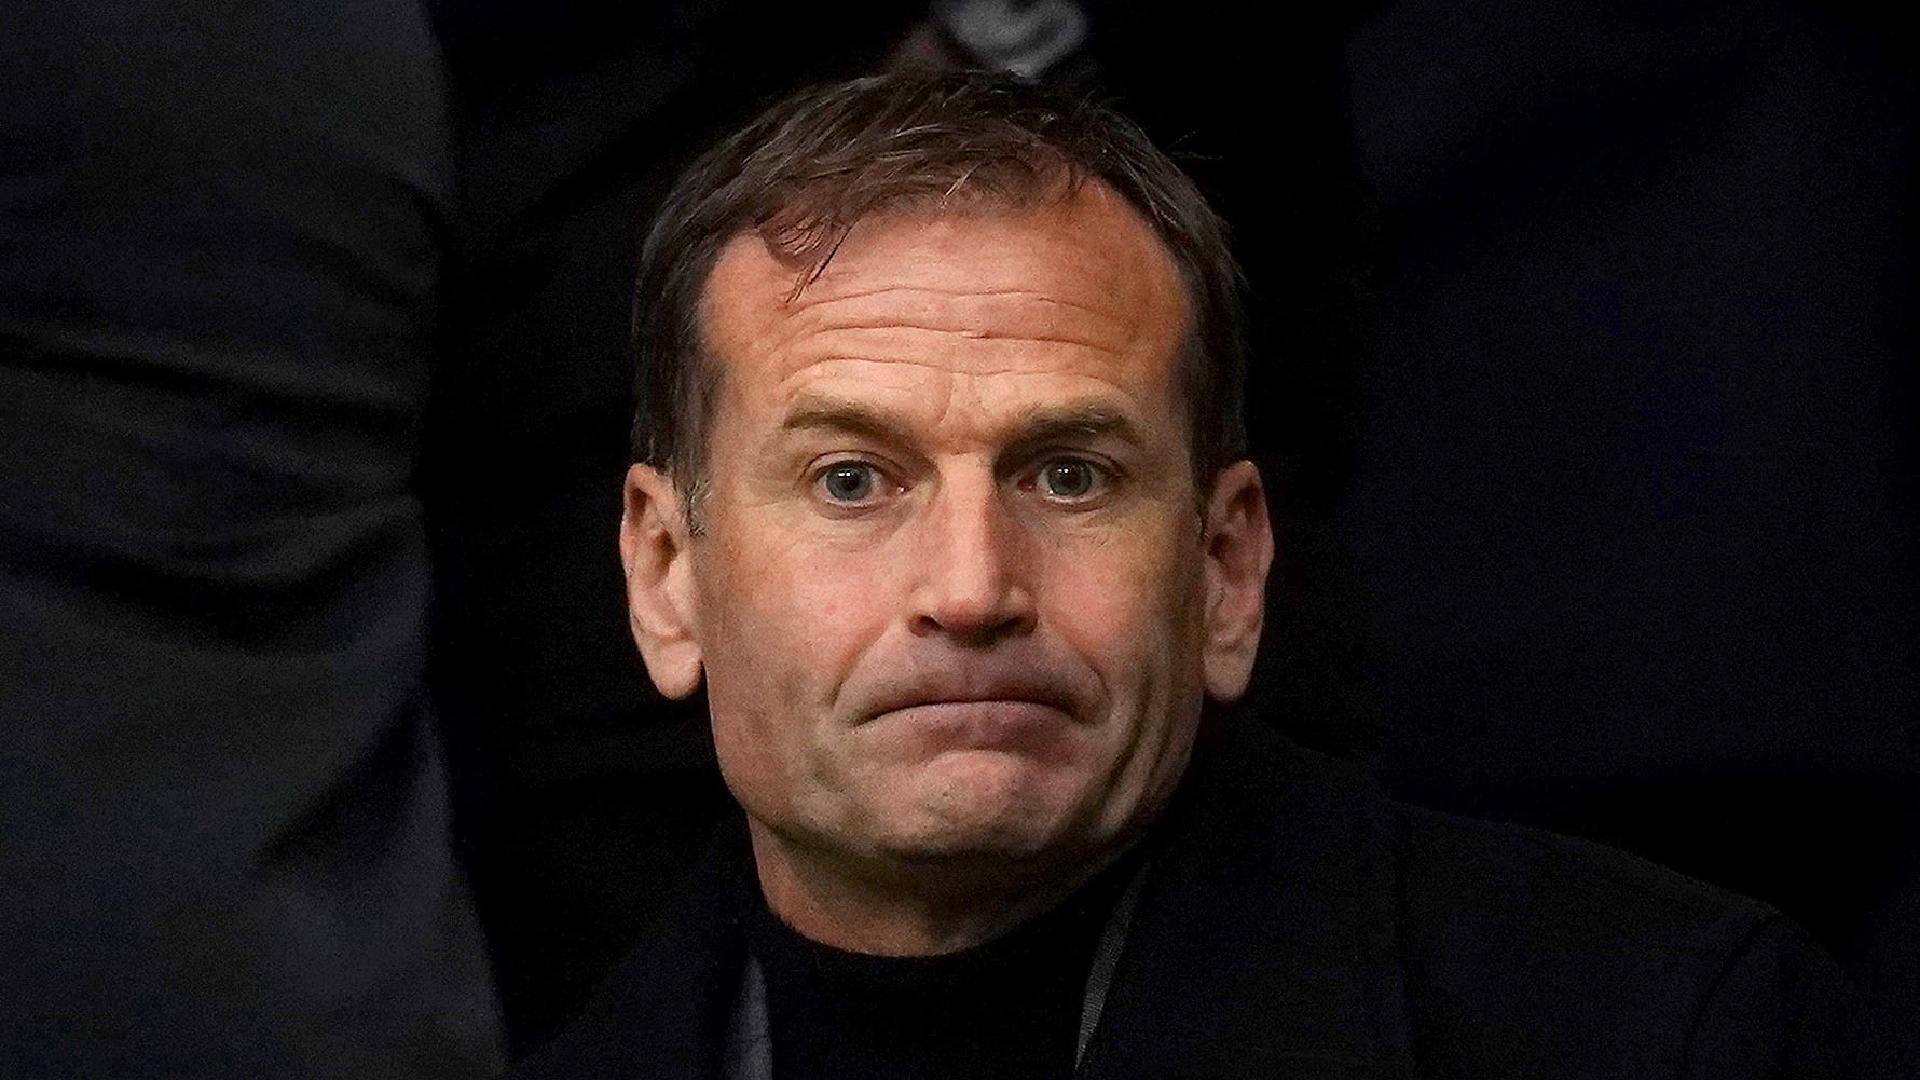 Newcastle sporting director Dan Ashworth placed on leave amid Man Utd links